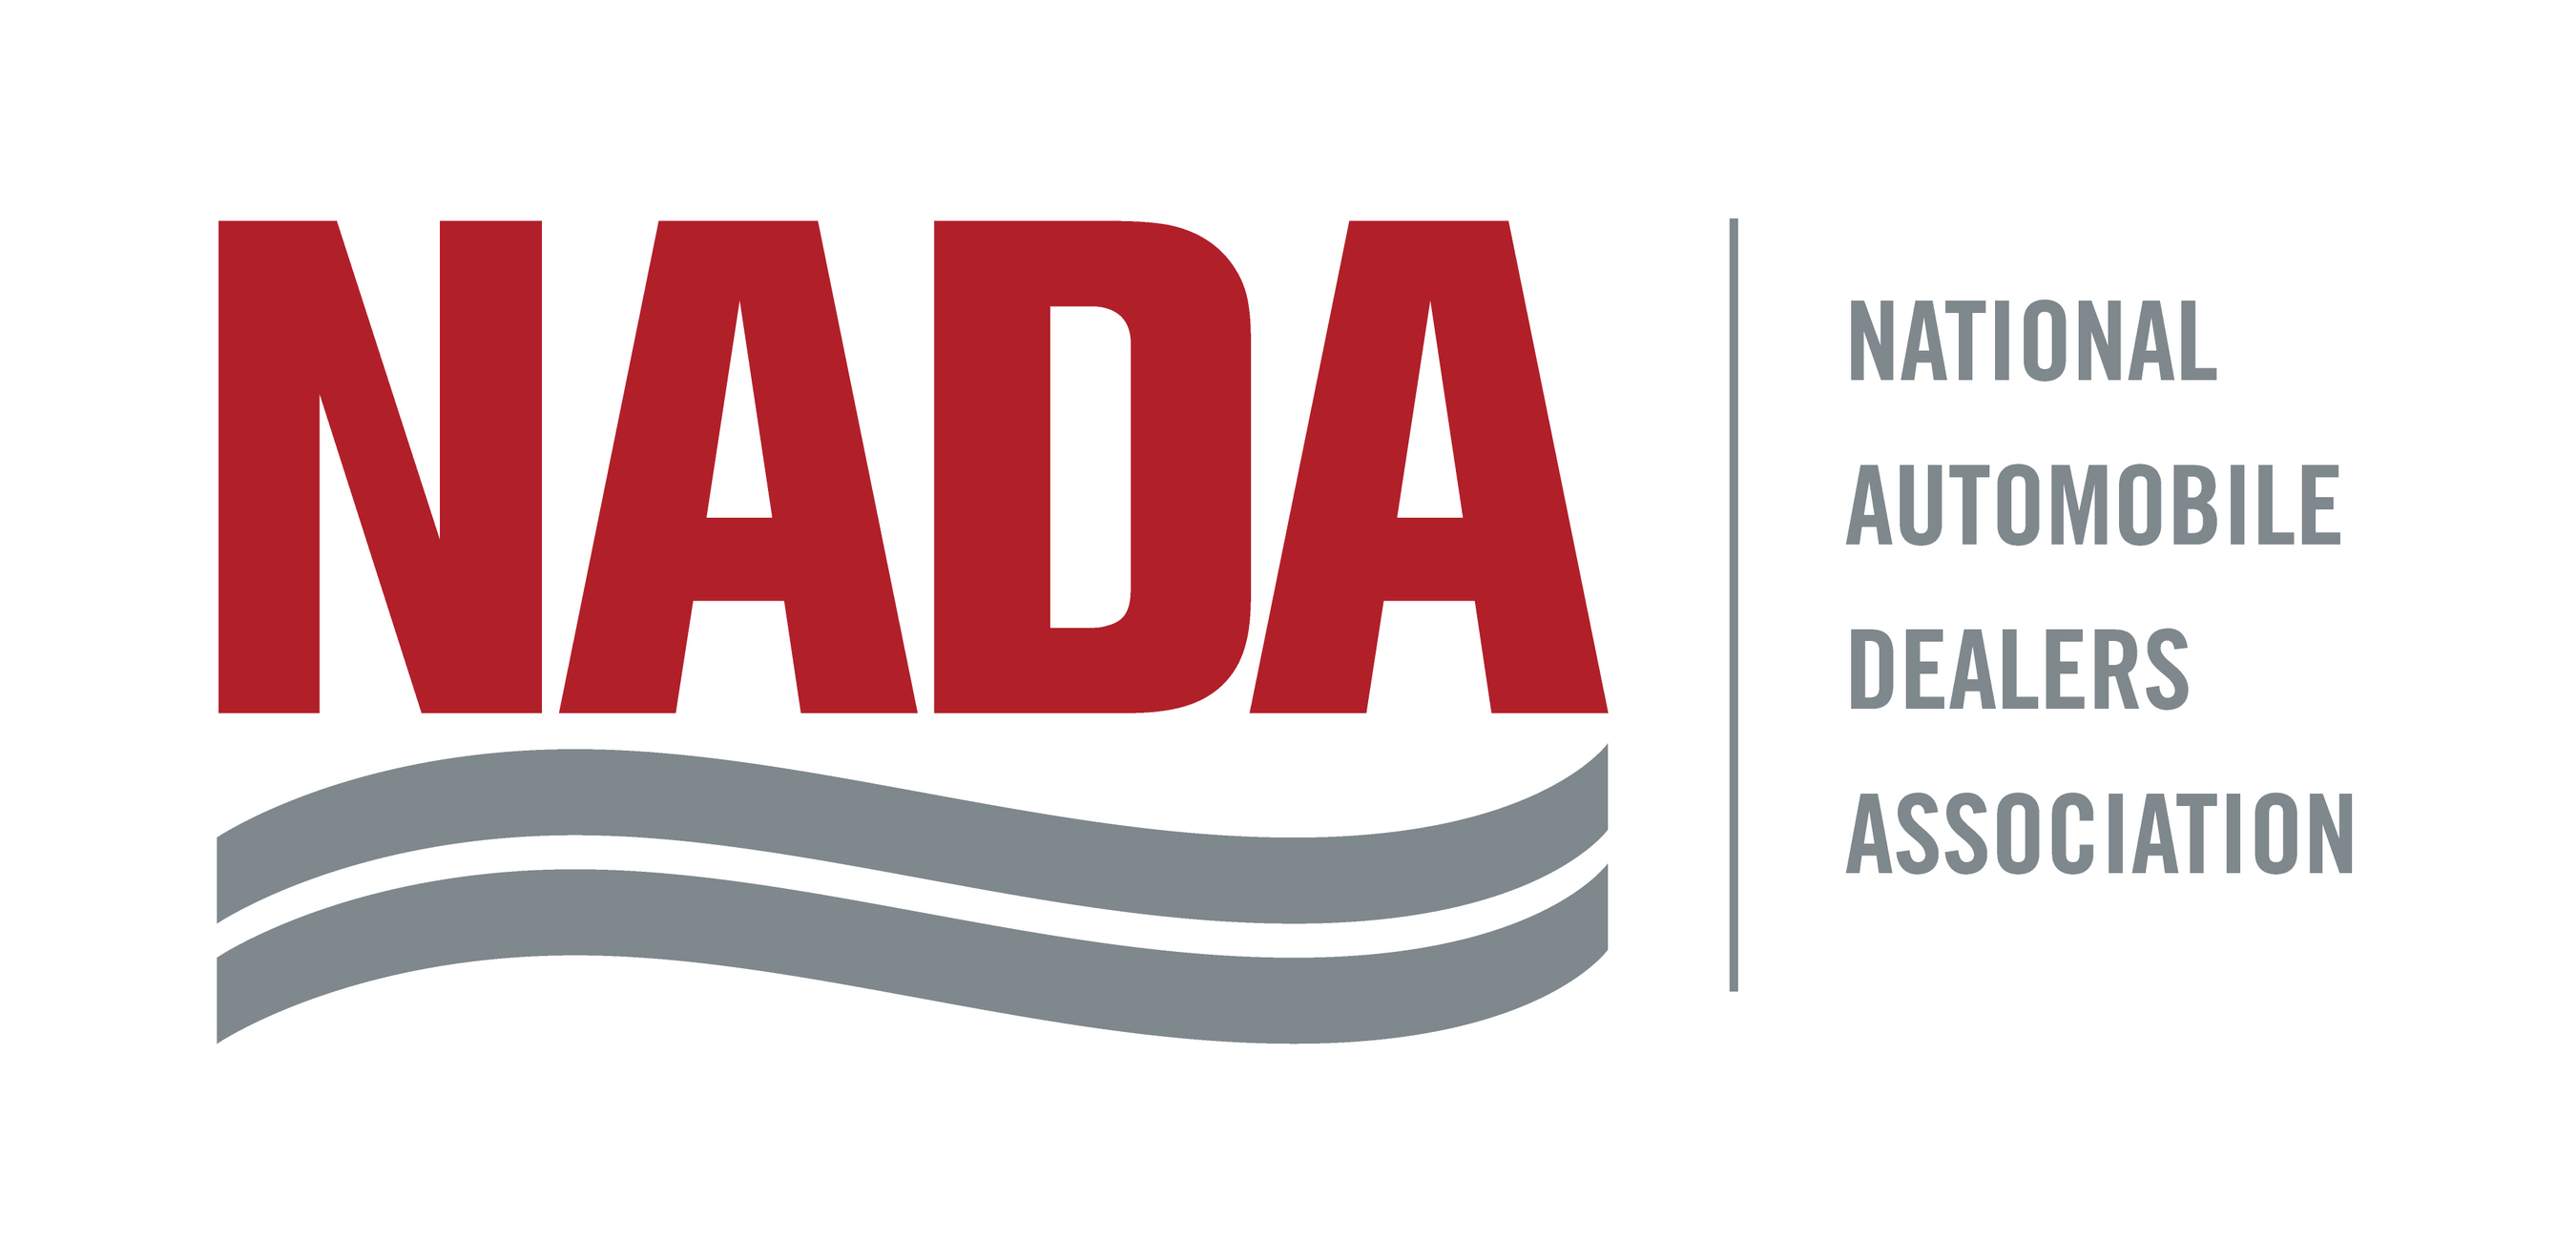 National Automobile Dealers Association.